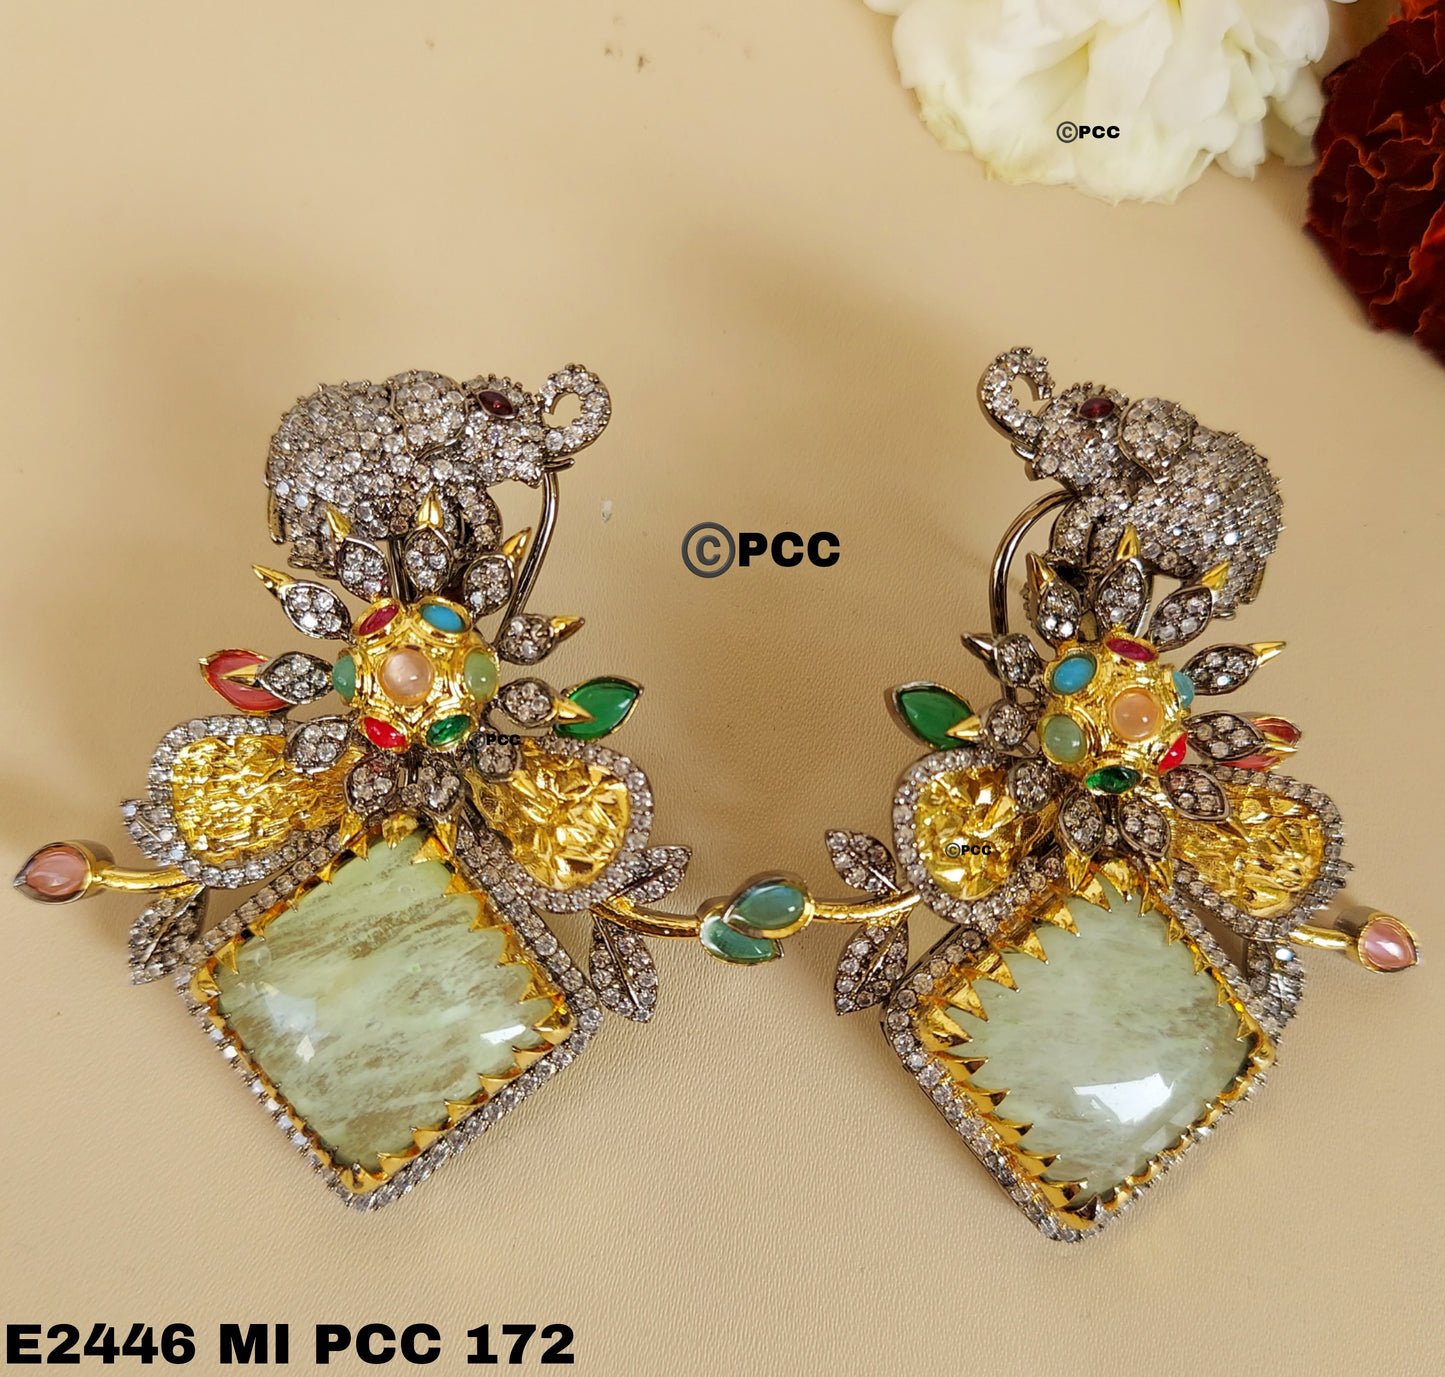 Semi-precious earrings featuring mother of pearl